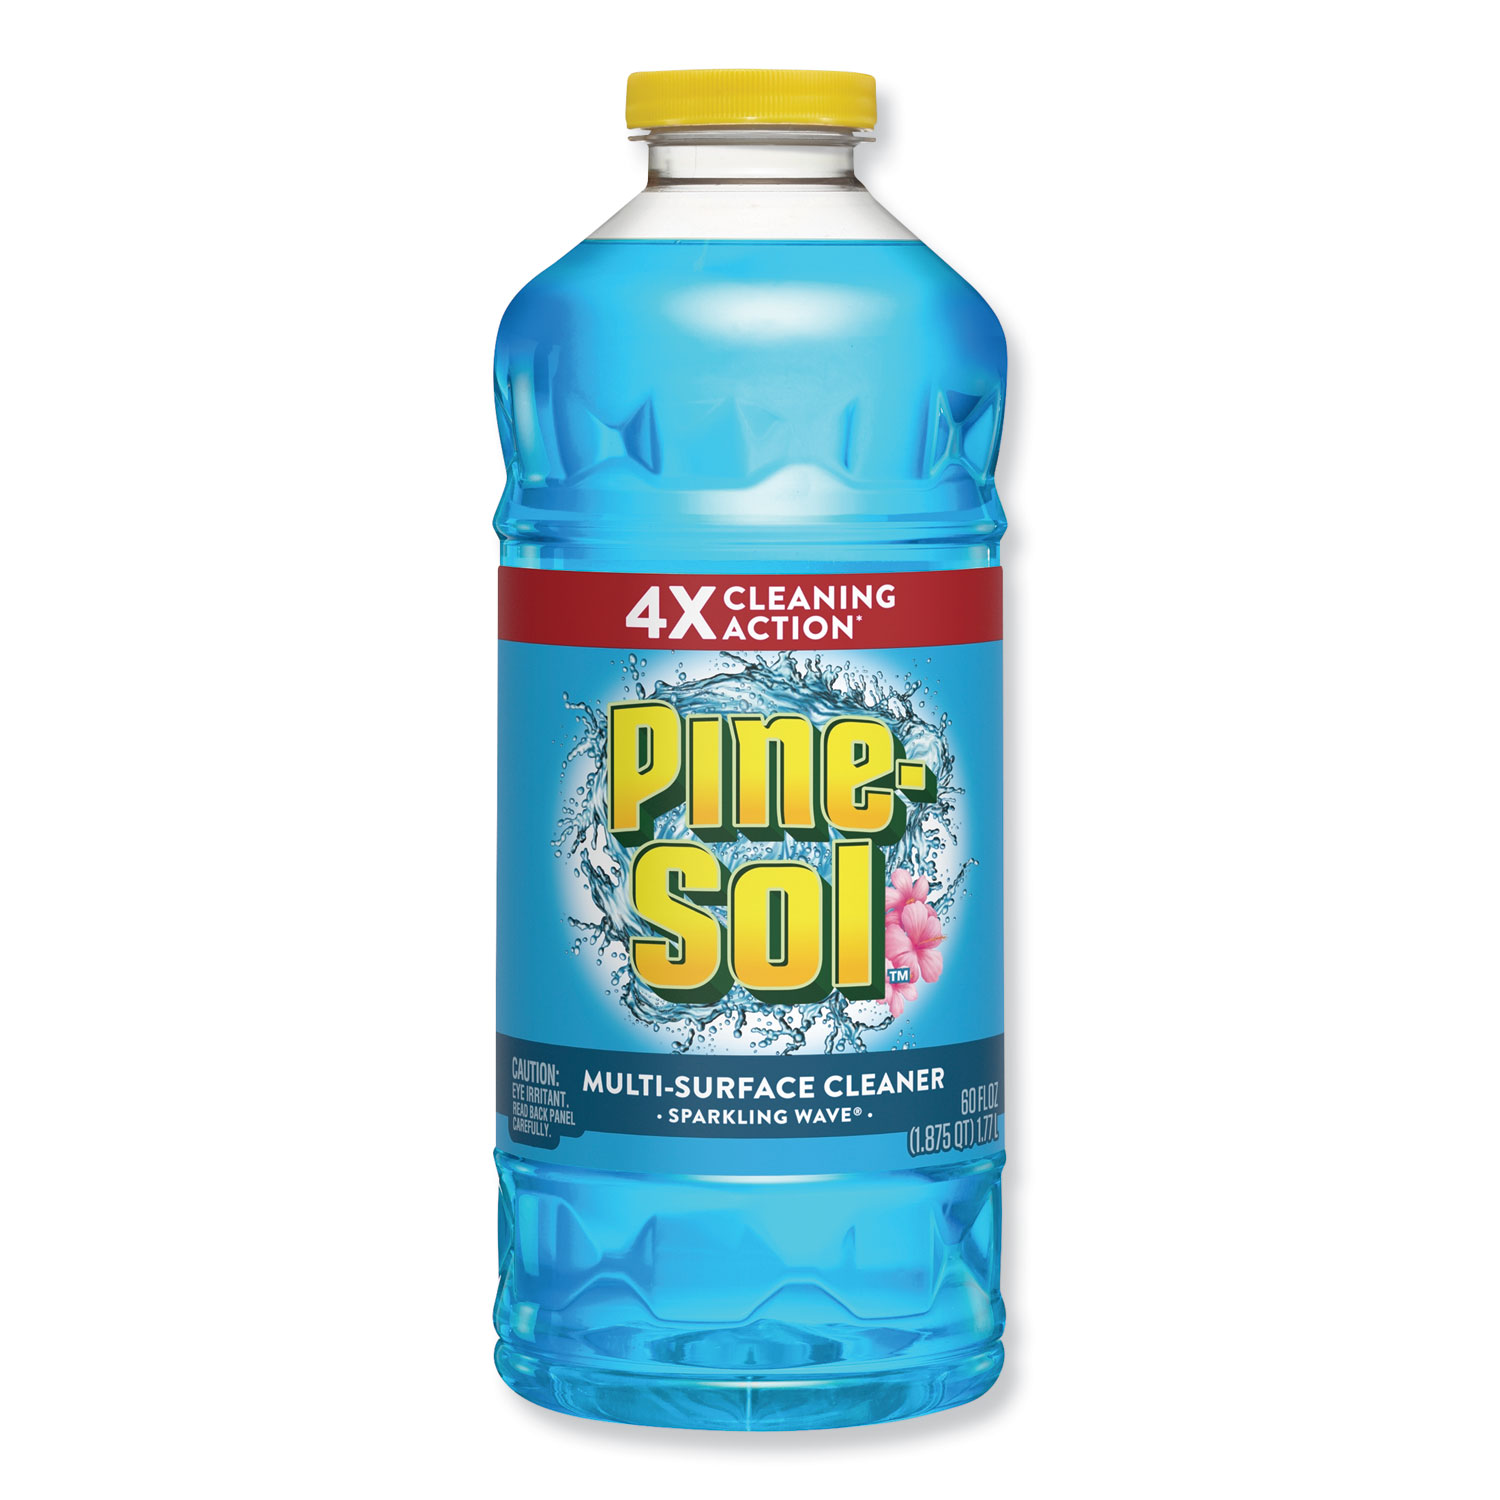  Pine-Sol CLO 40238 Multi-Surface Cleaner, Sparkling Wave, 60 oz, 6 Bottles/Carton (CLO40238) 